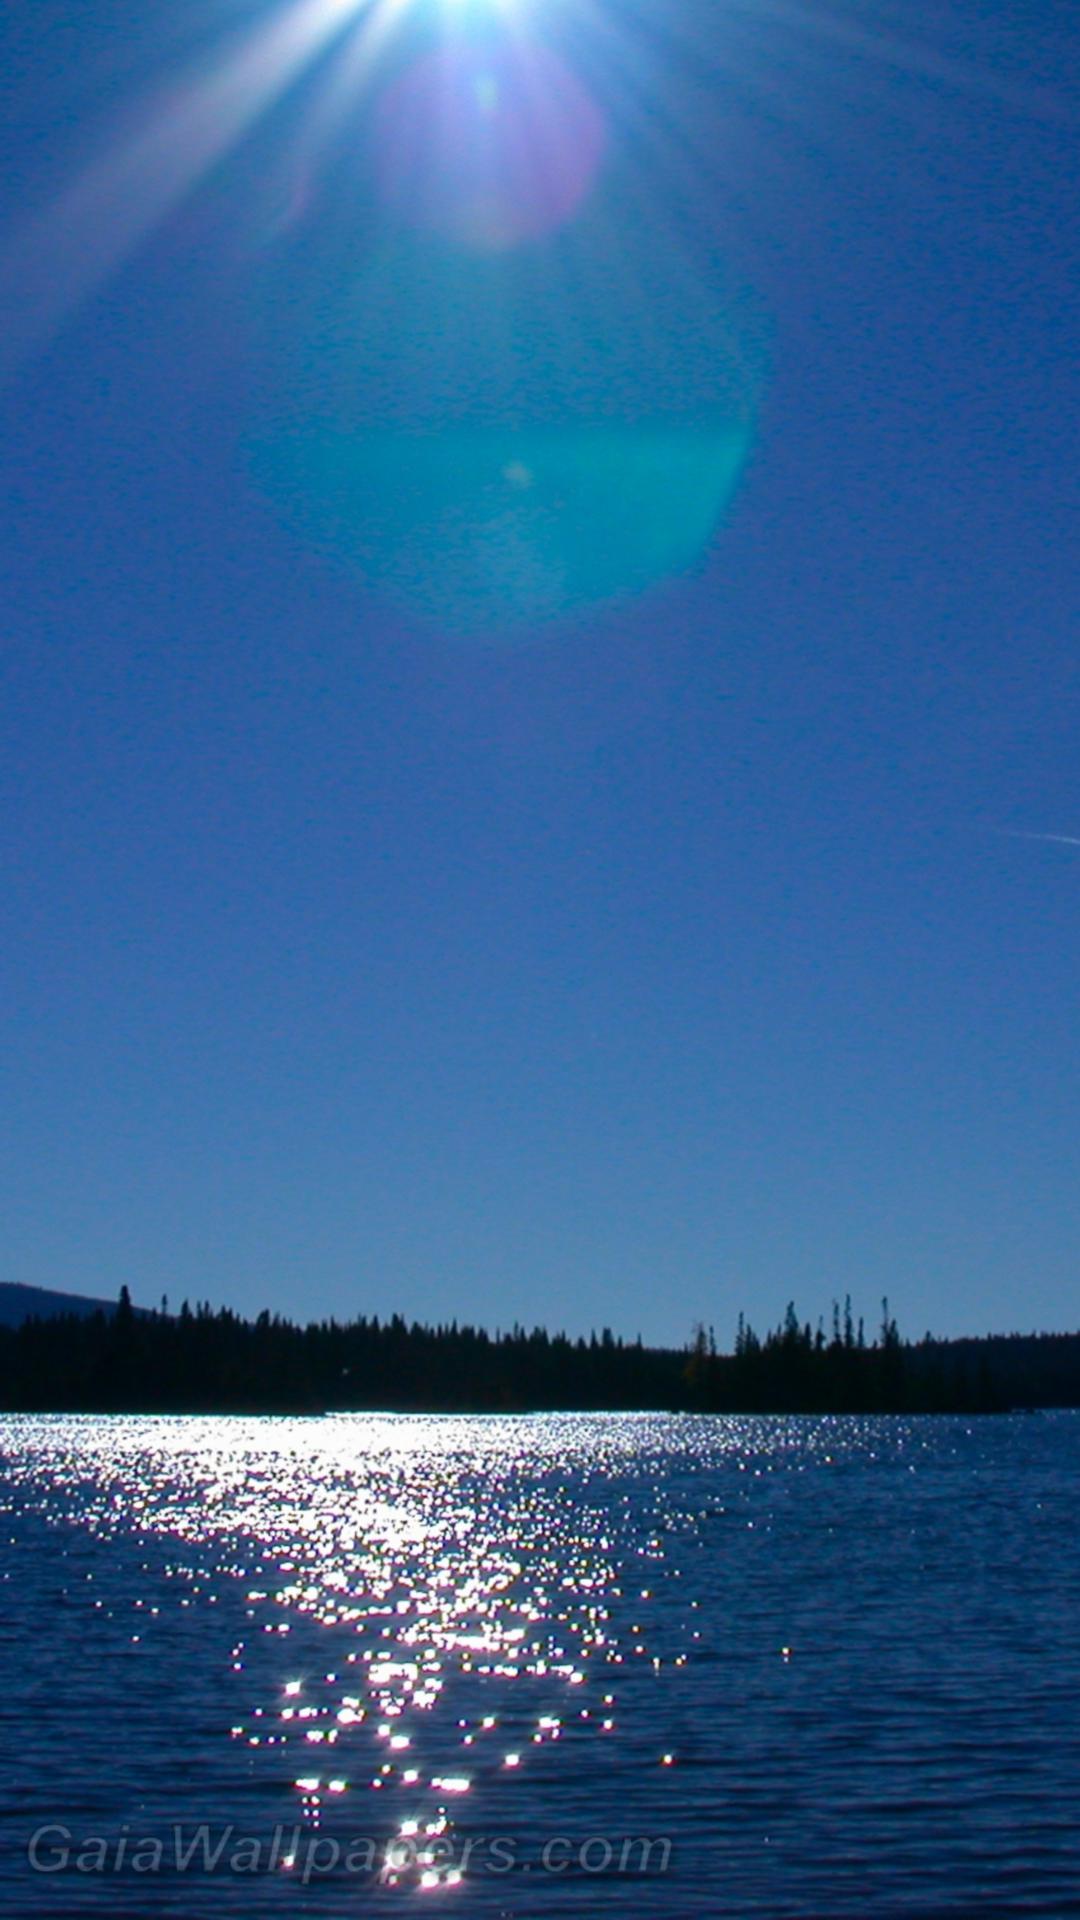 Lac et ciel bleu intense - Fonds d'écran gratuits